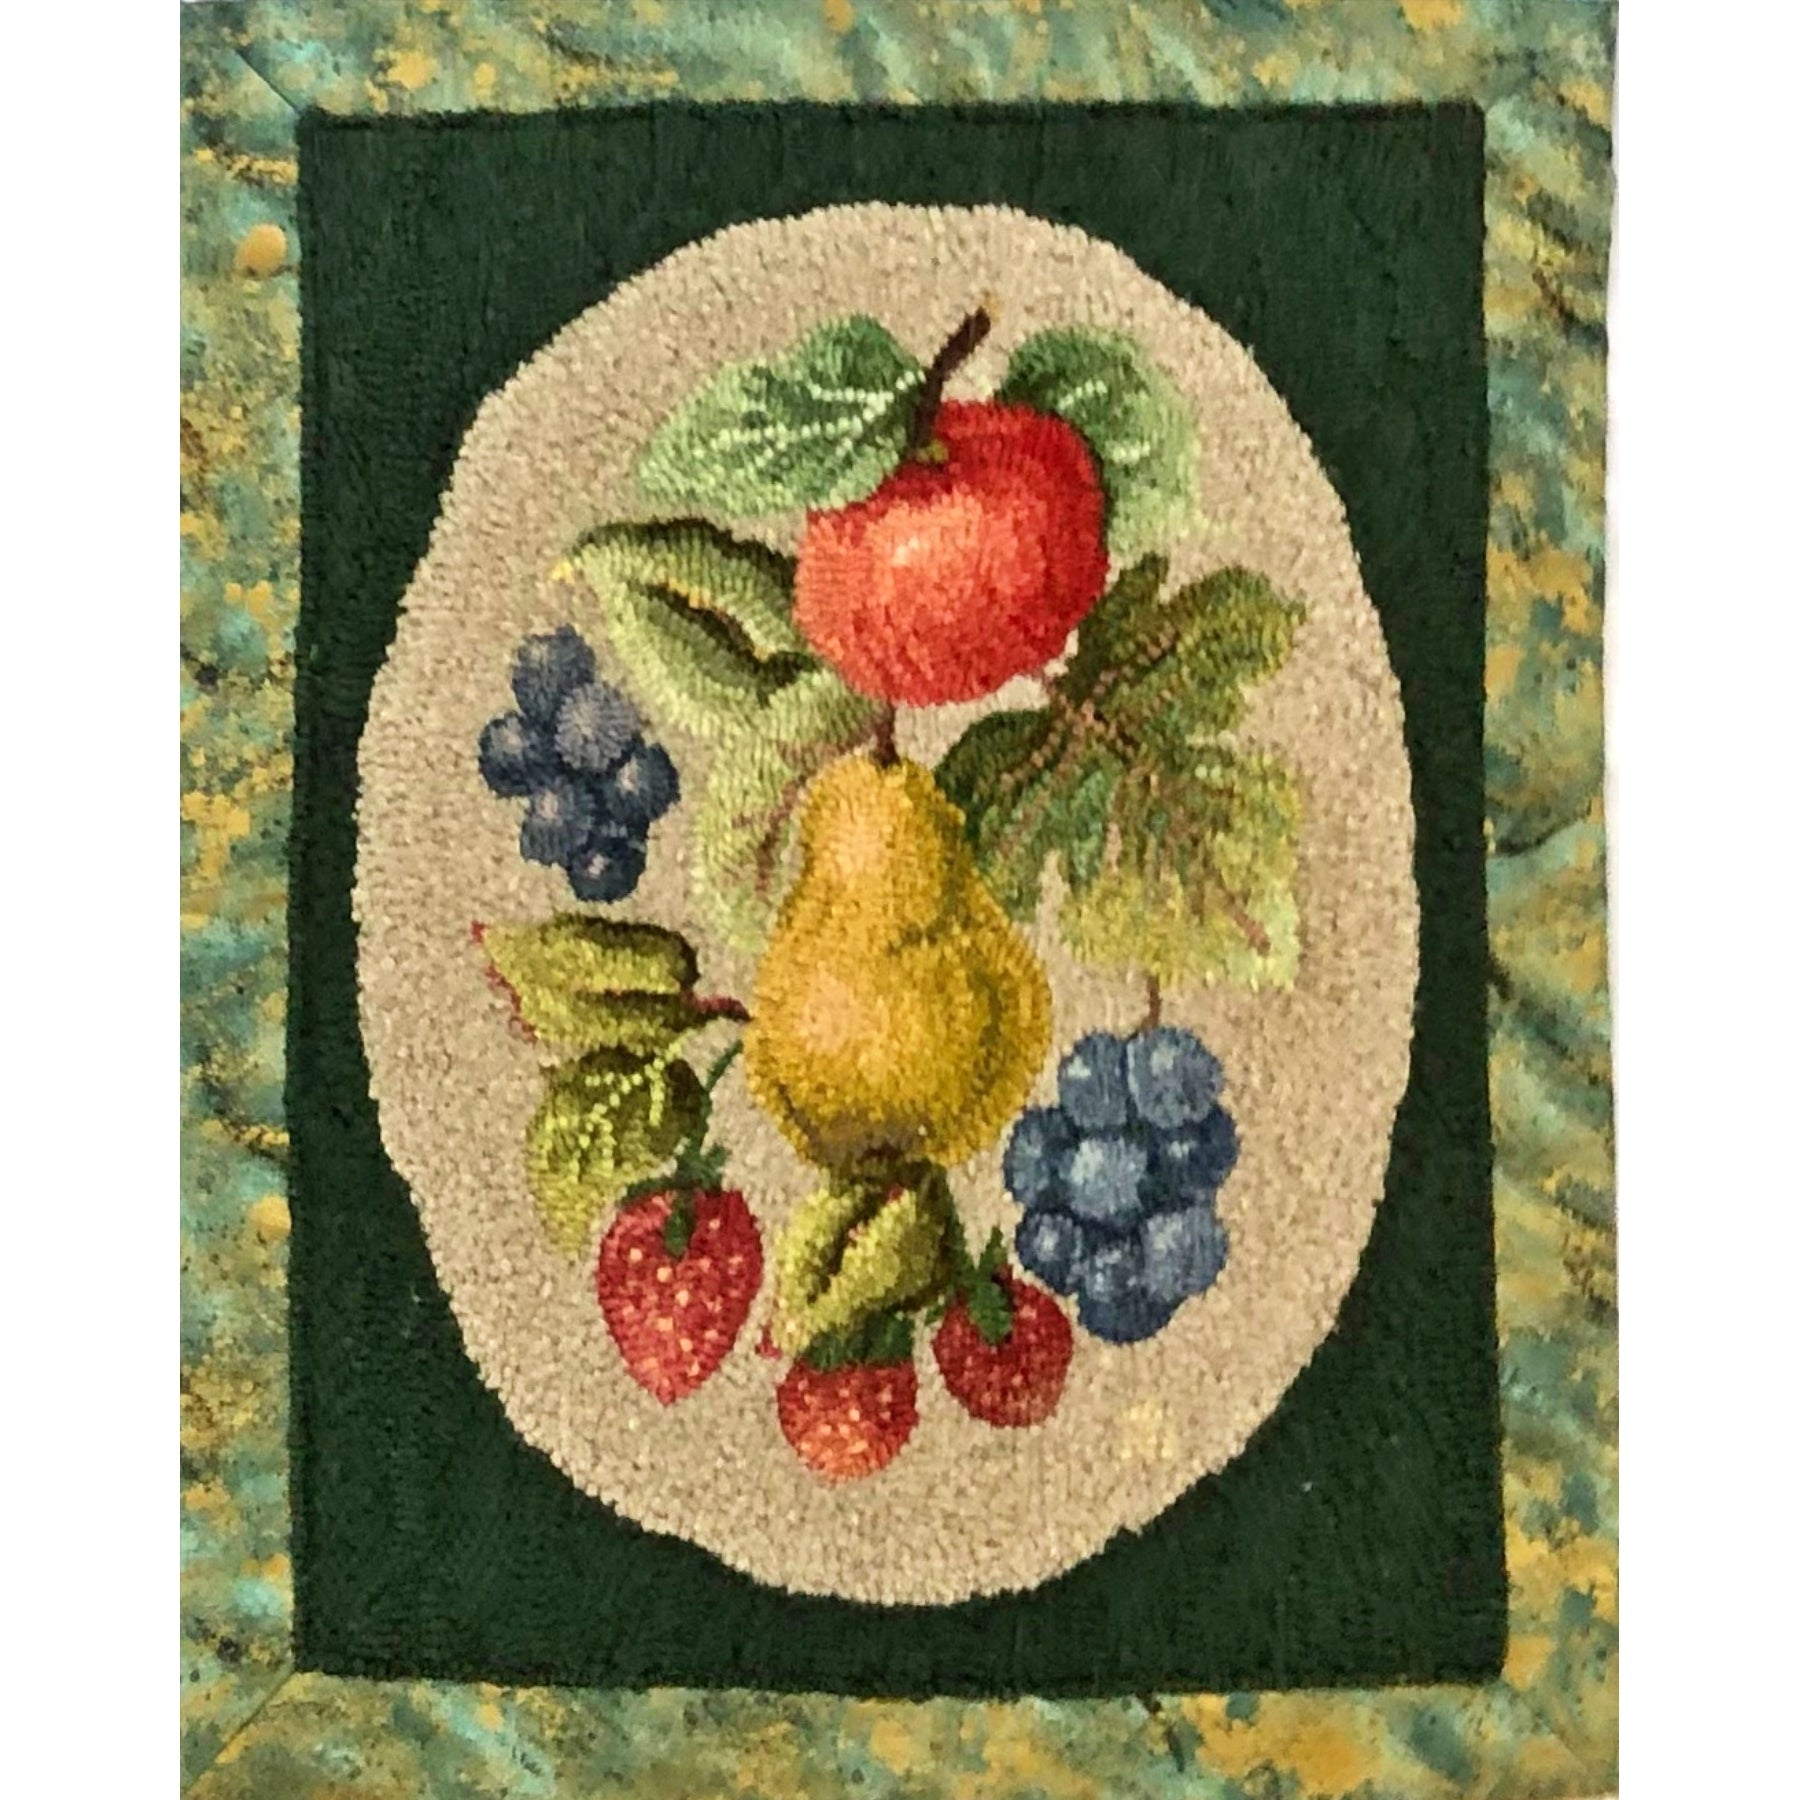 Companion Fruit, rug hooked by Yoshiho Nara